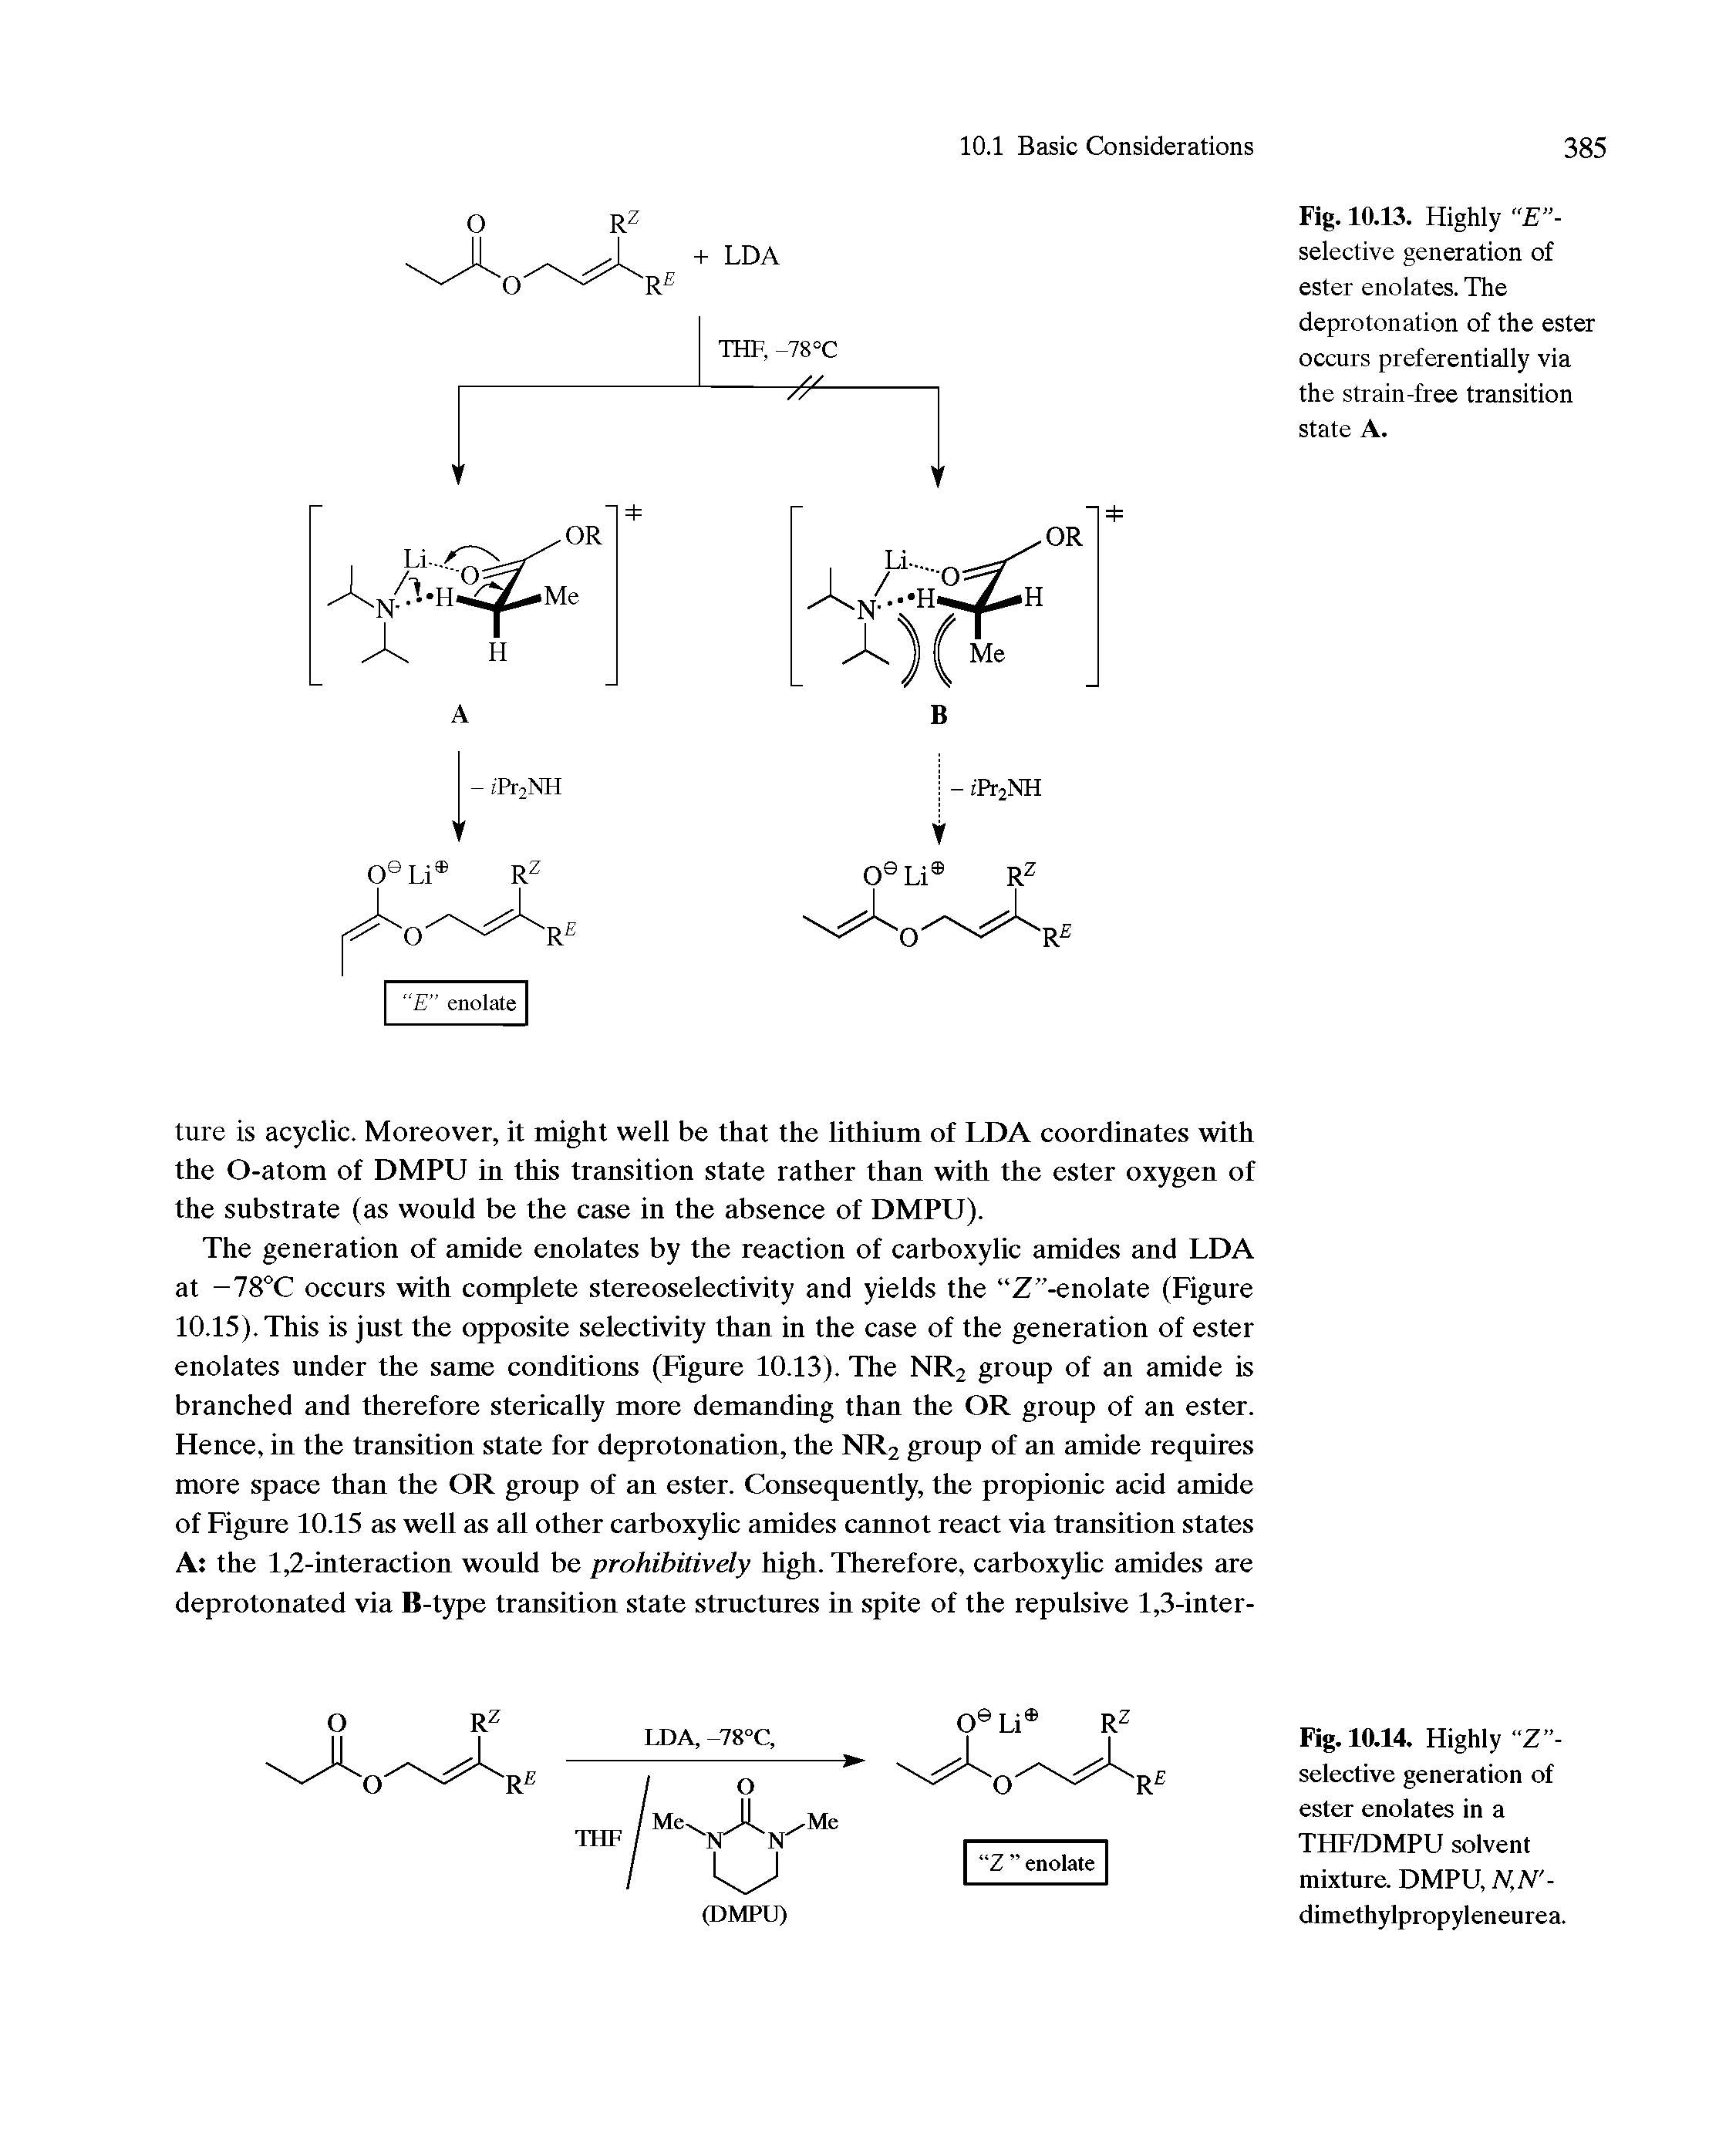 Fig. 10.14. Highly Z -selective generation of ester enolates in a THF/DMPU solvent mixture. DMPU, N,N -dimethylpropyleneurea.